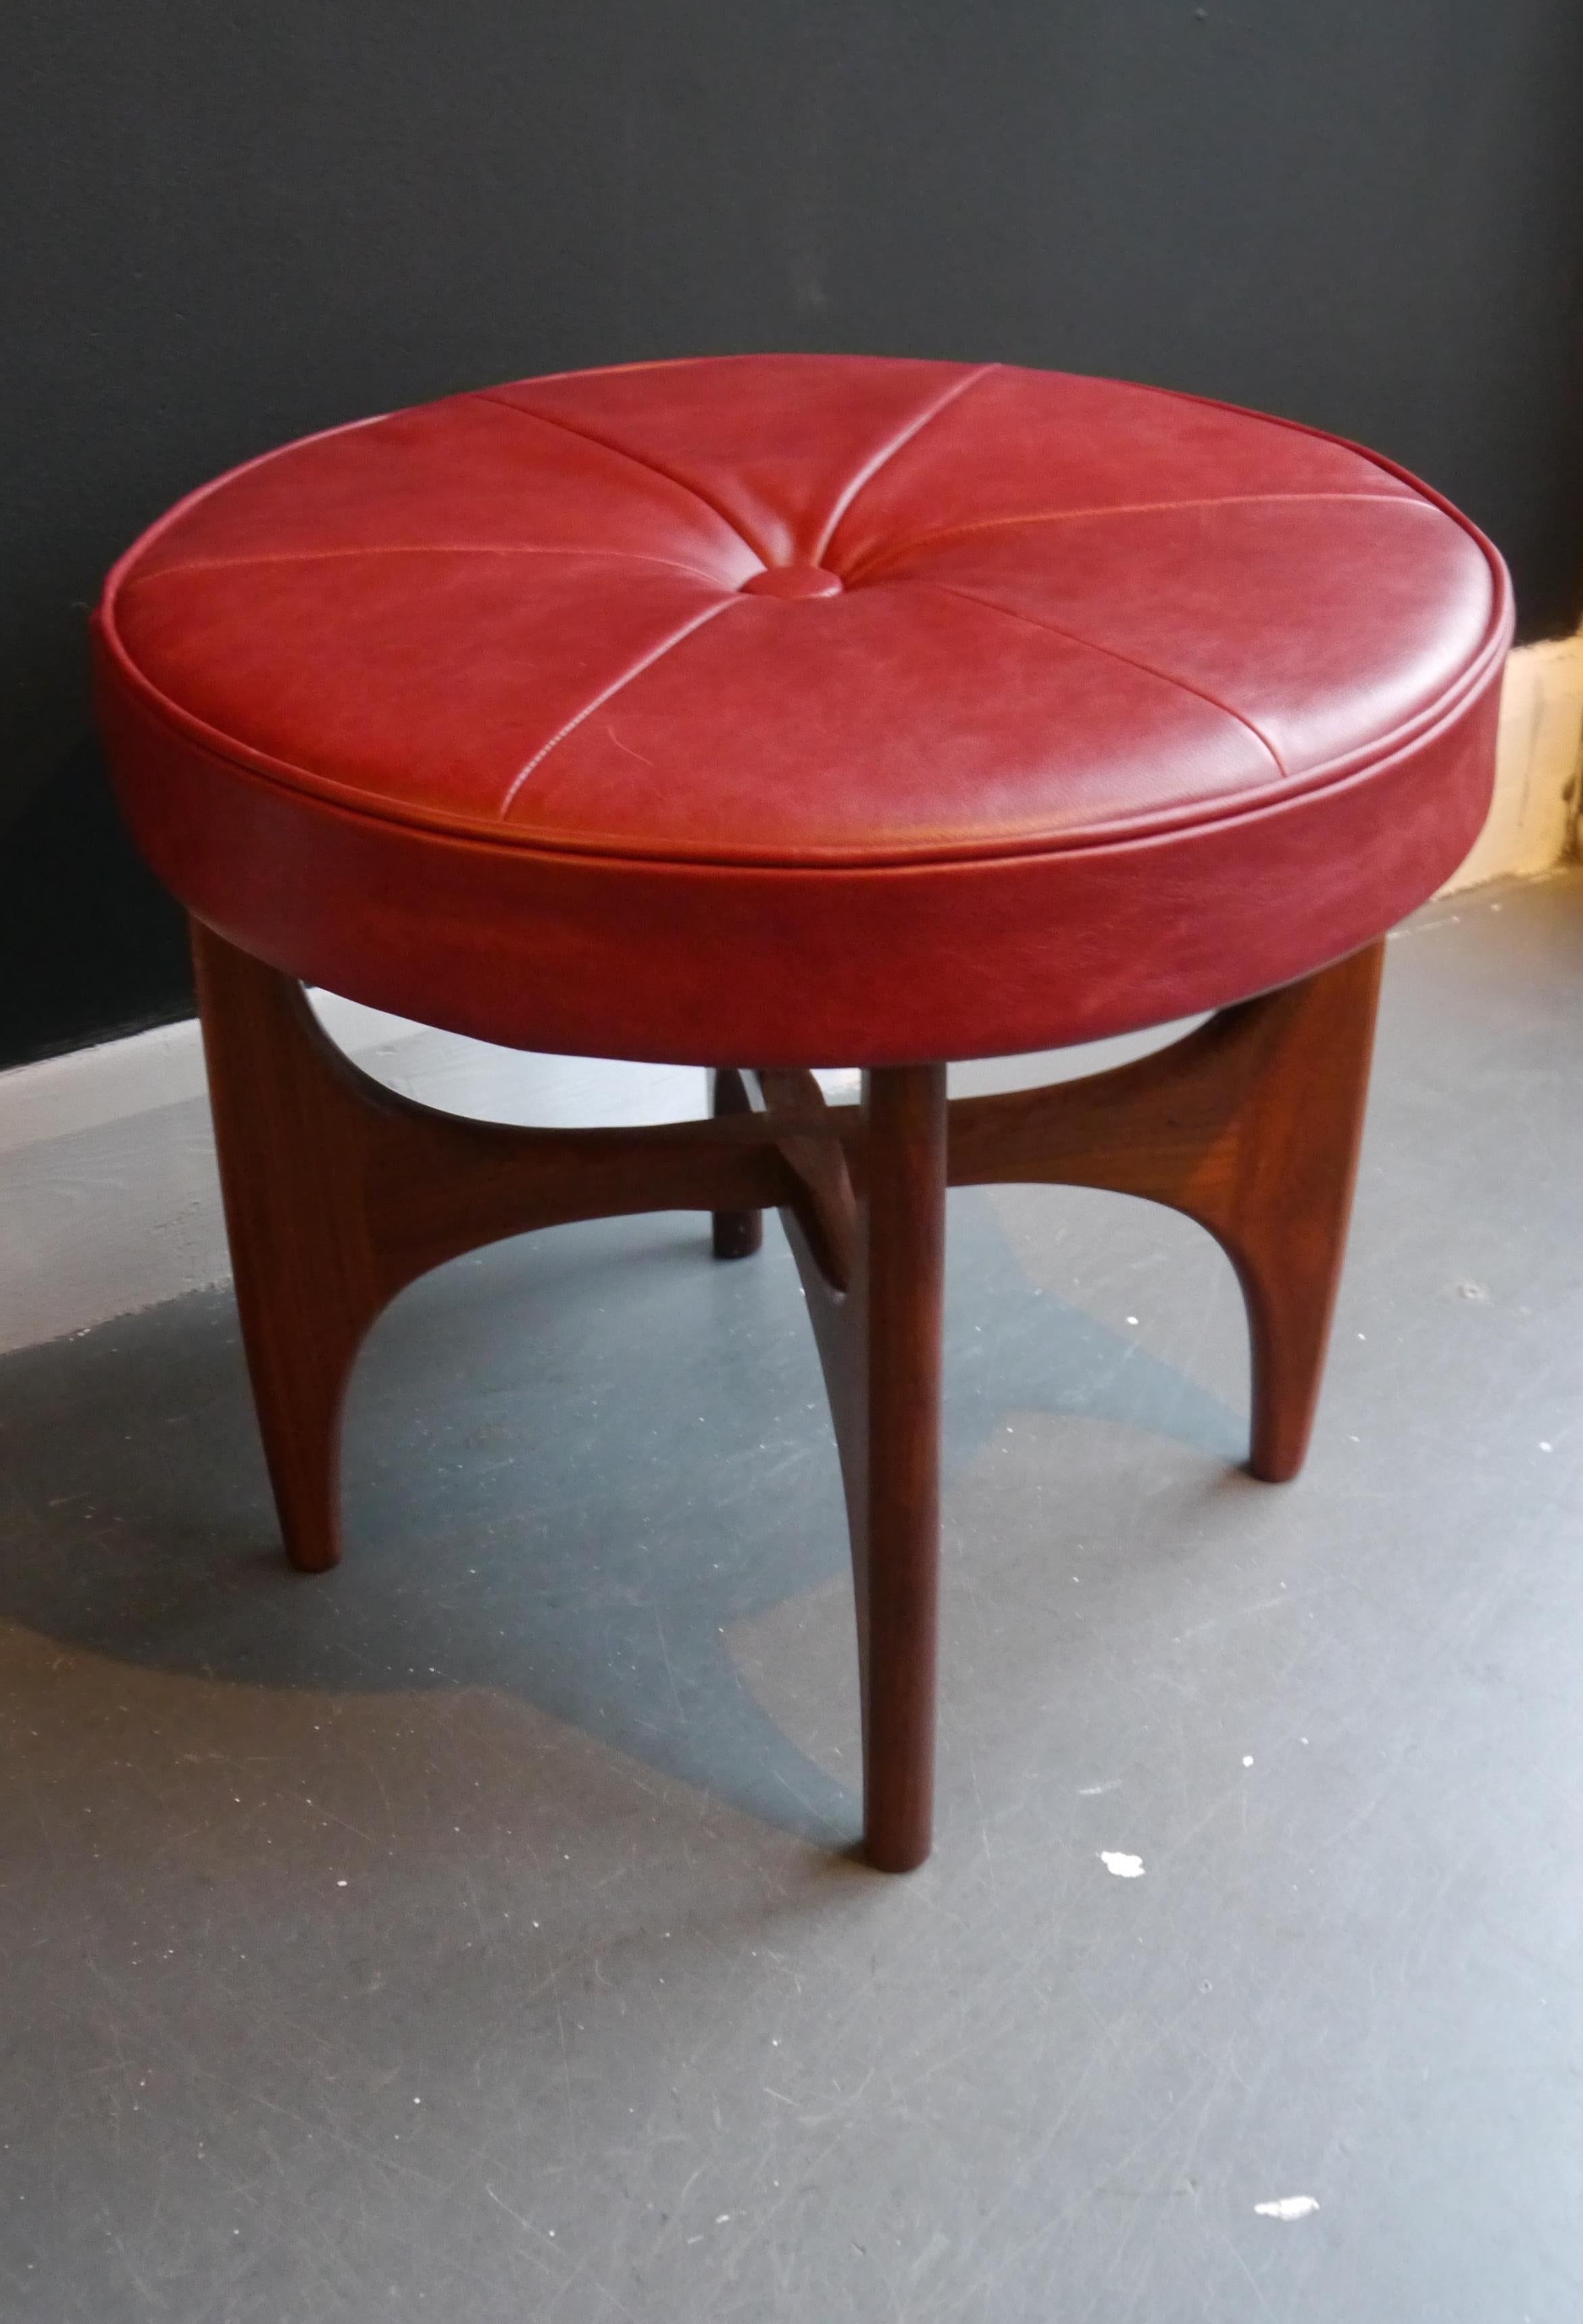 1970s English G-plan Teak based leather/cloth footstool designed by Kofod larsen For Sale 1